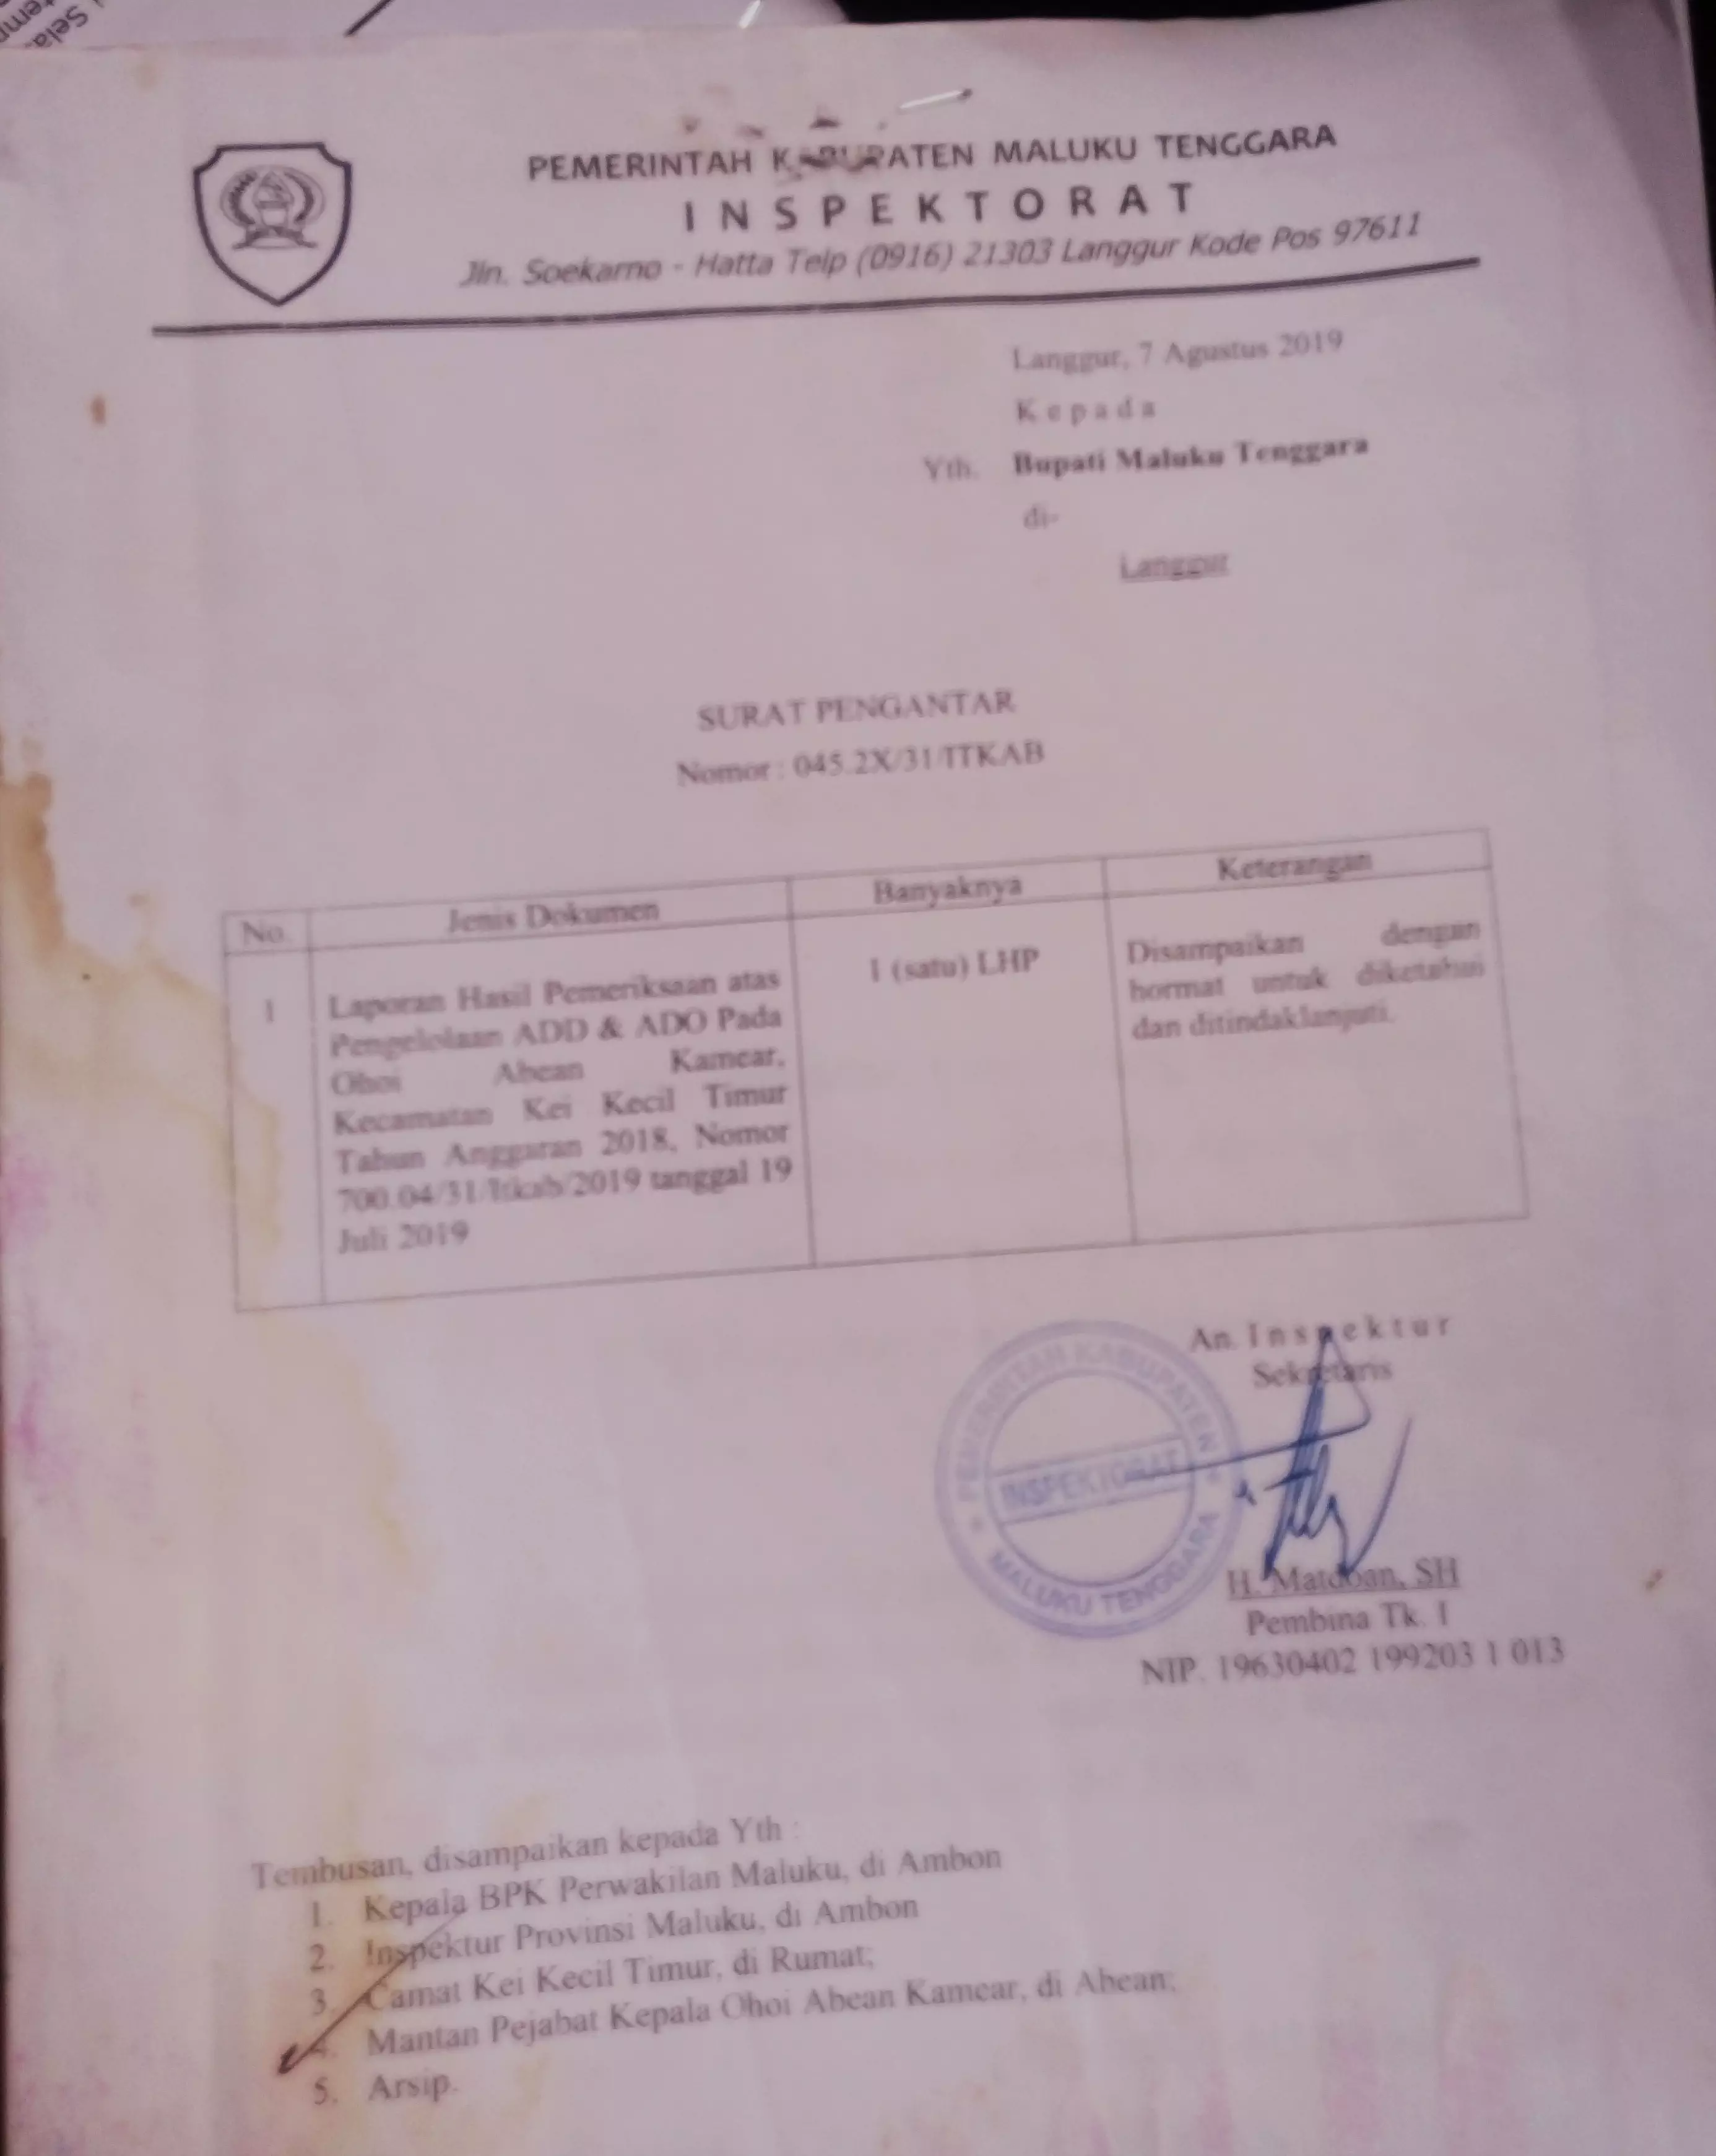 Ini bukti surat pengantar dokumen lph dana desa abean kamear ditandtangani sekretaris inspektorat h. Matdoan sh tanggal 7 agustus 2019